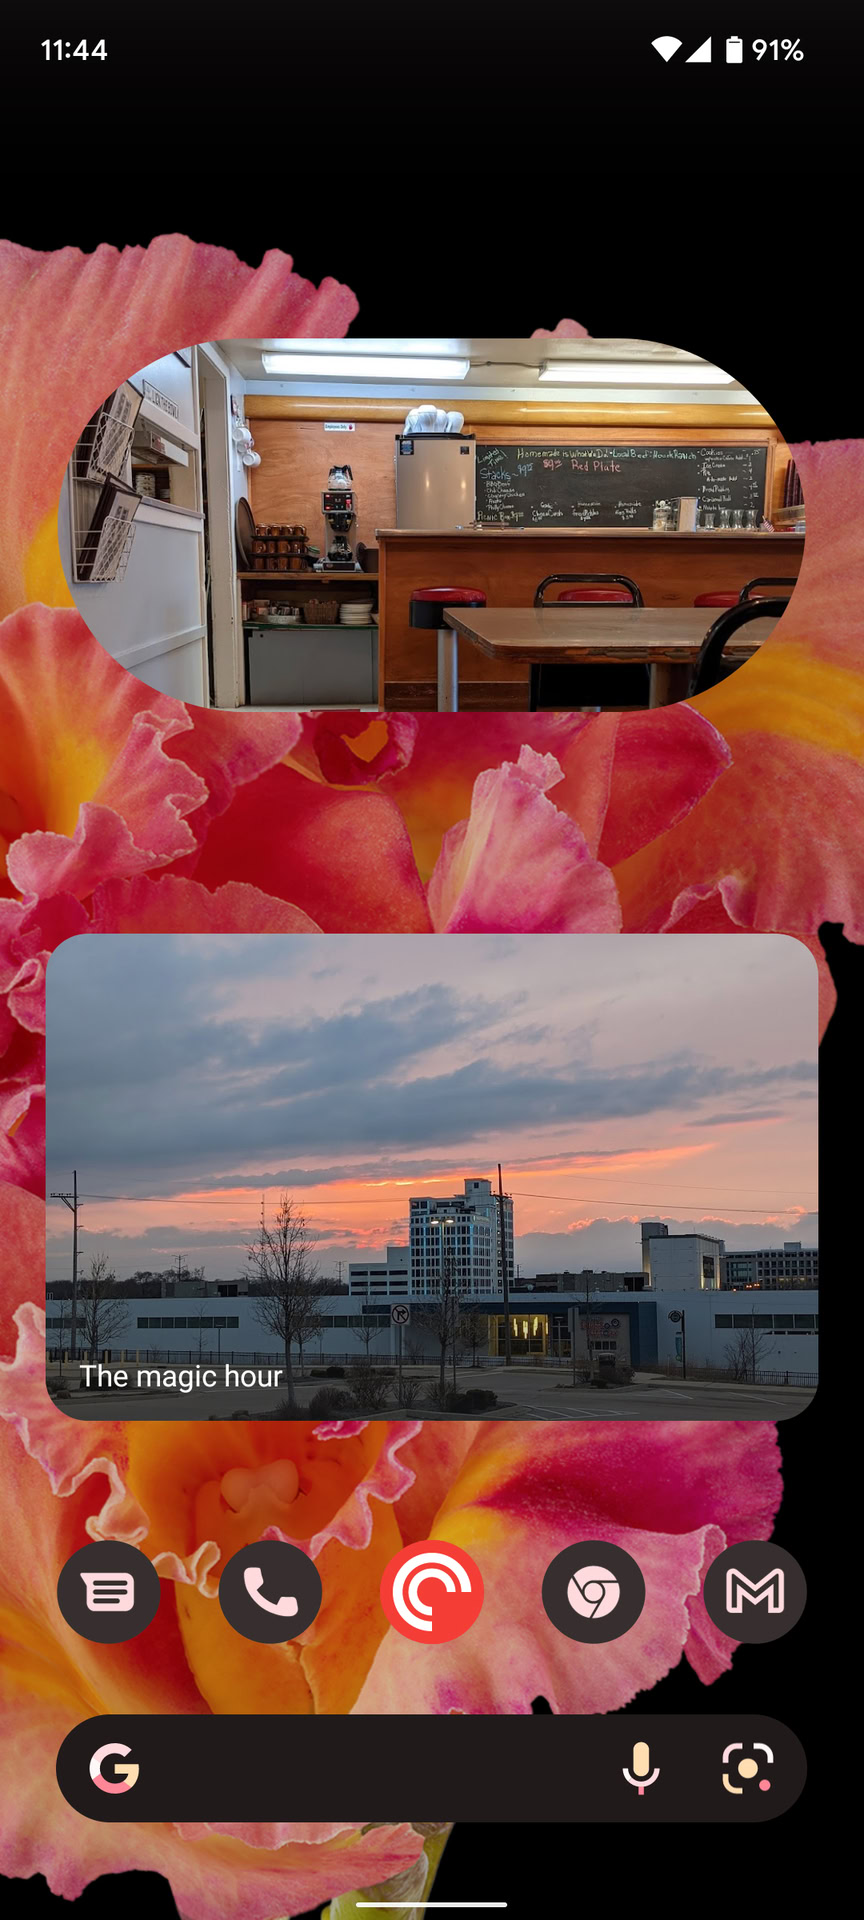 Google Photos Material You widgets home screen 3